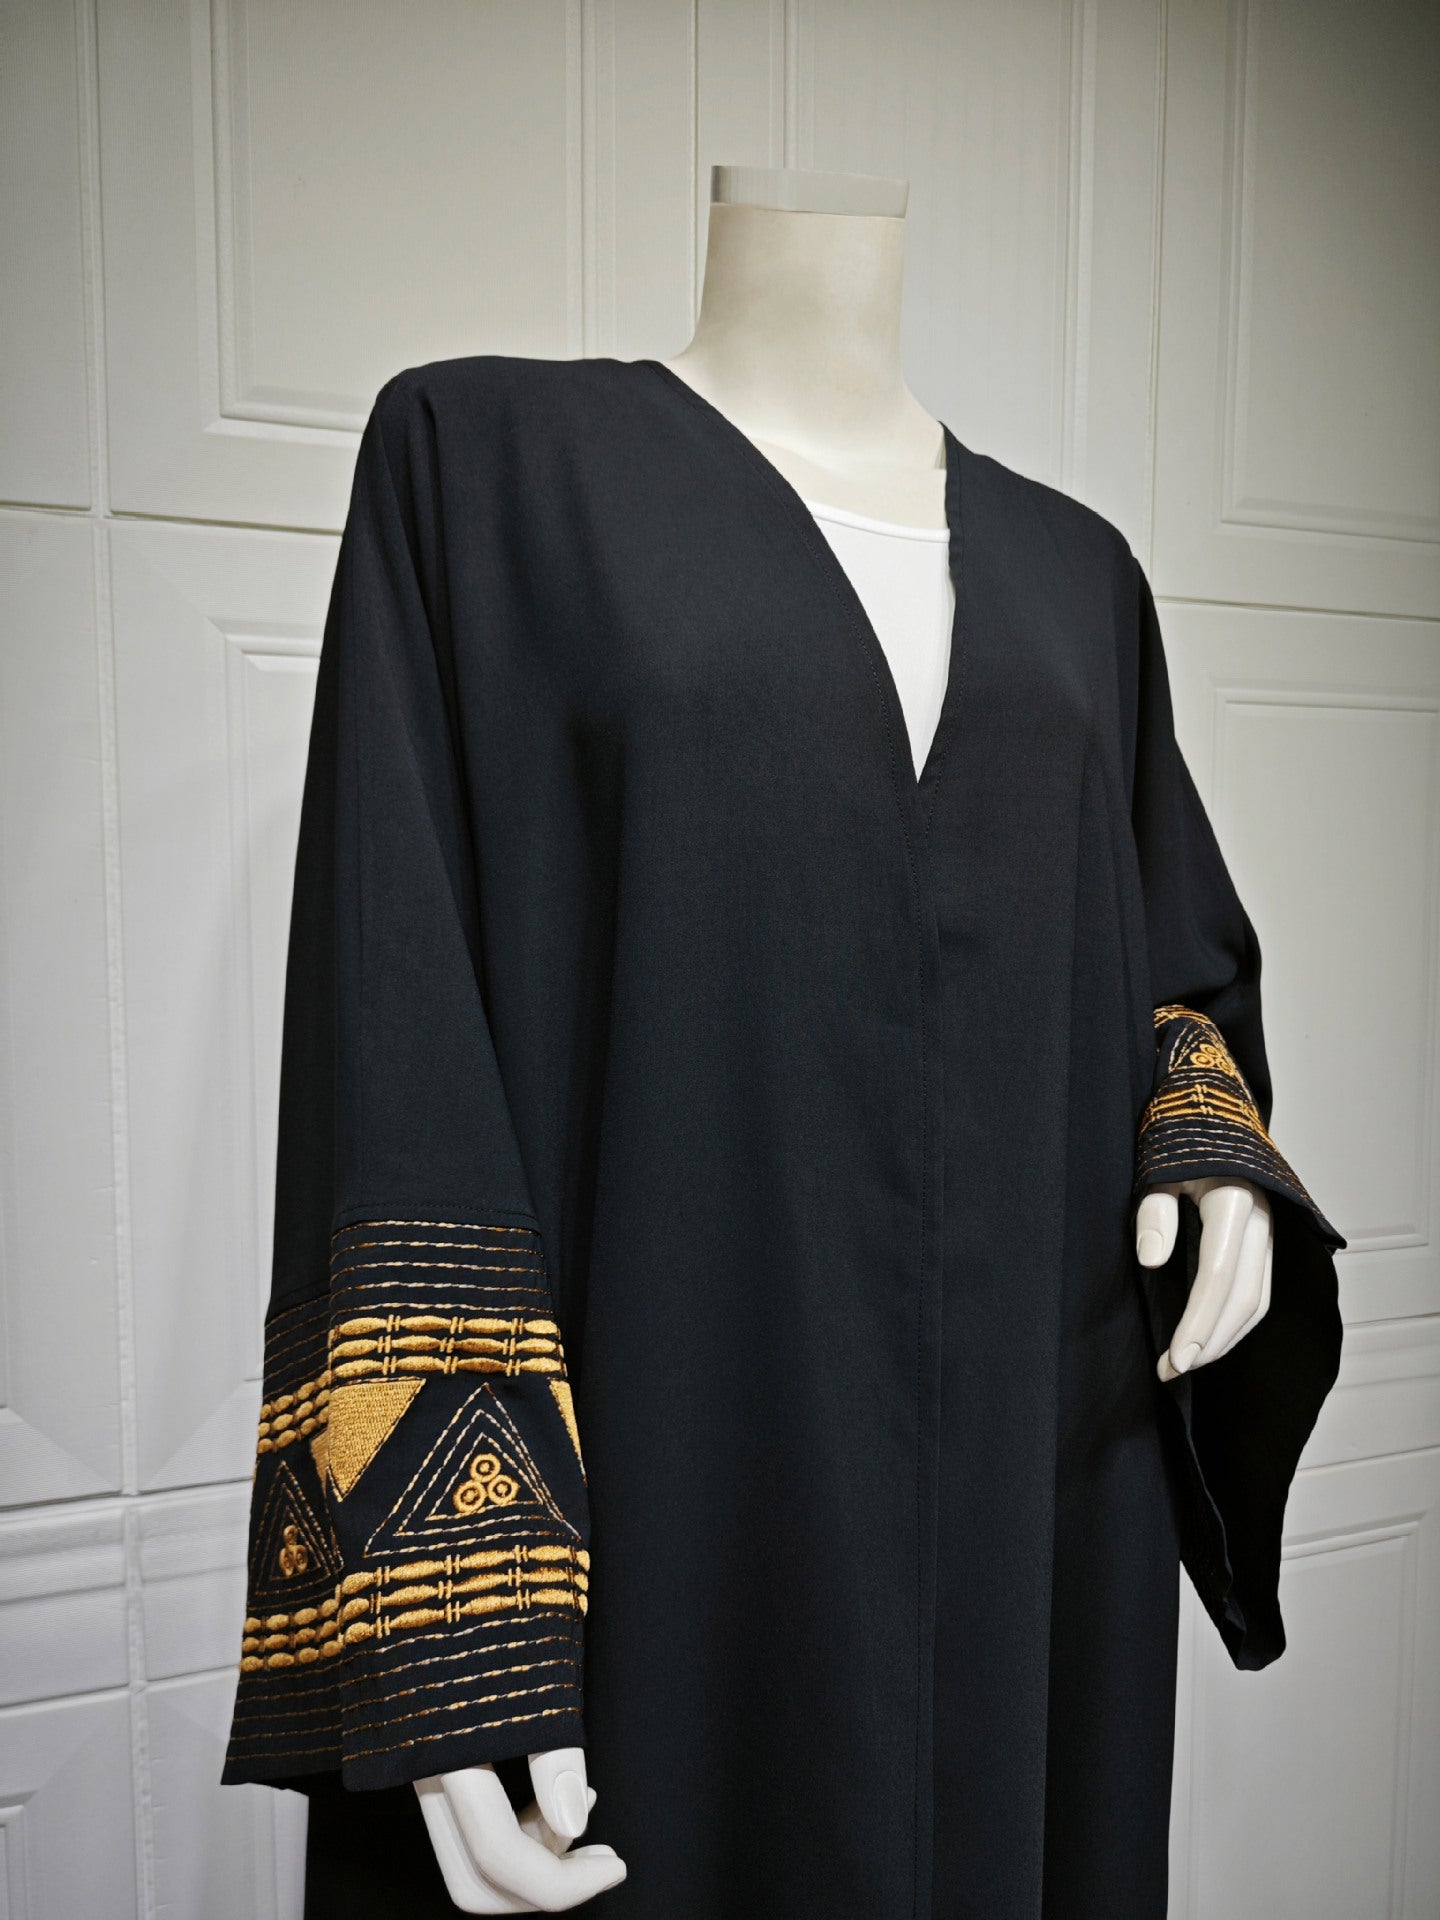 Arabian Embroidered Fashion Robe